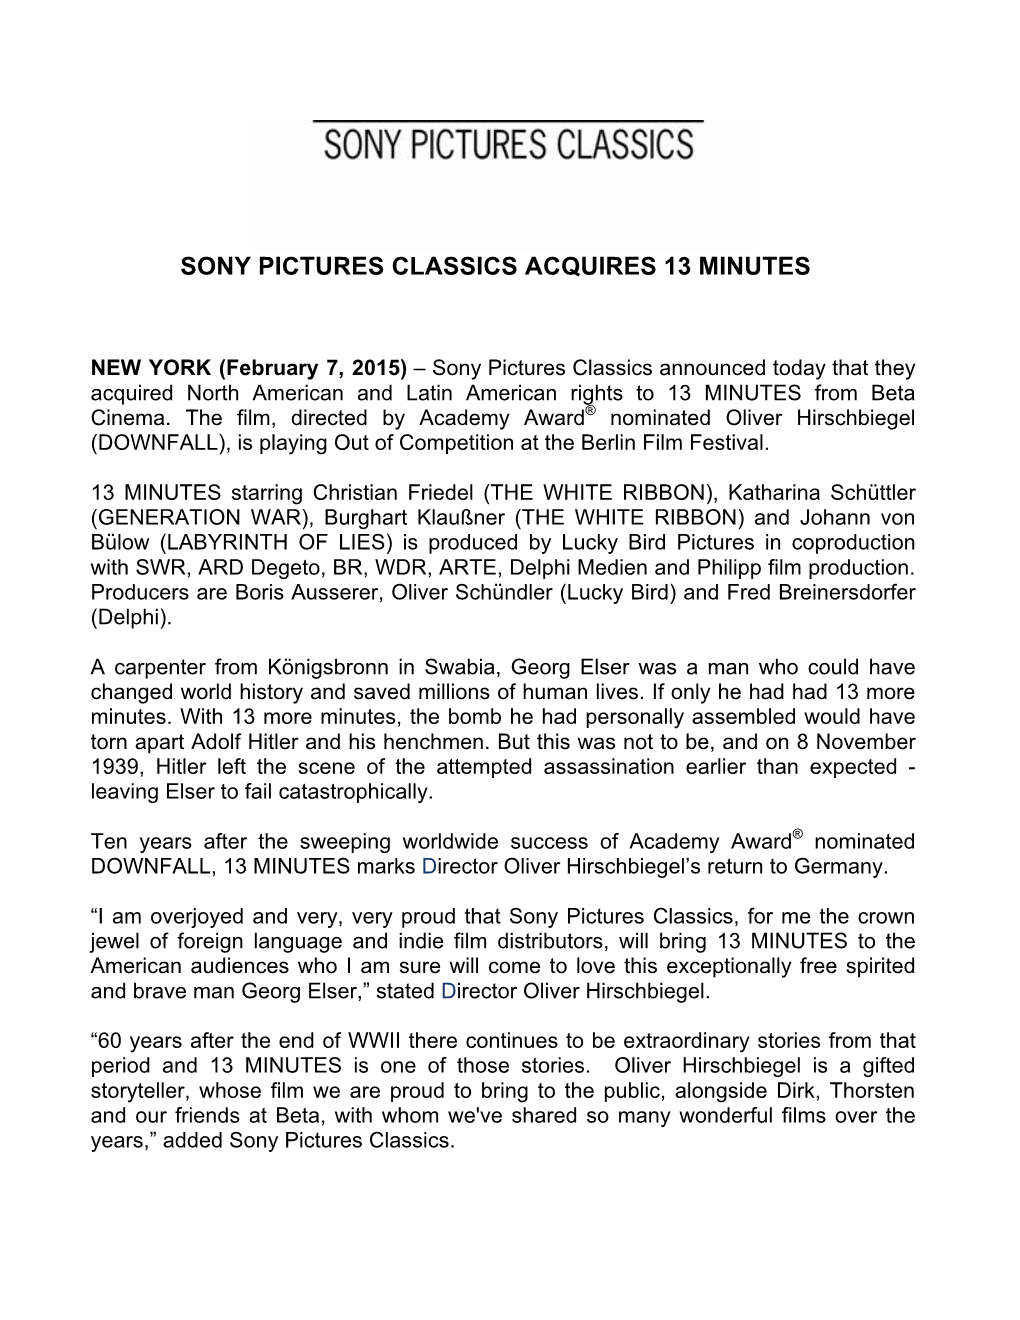 Sony Pictures Classics Acquires 13 Minutes